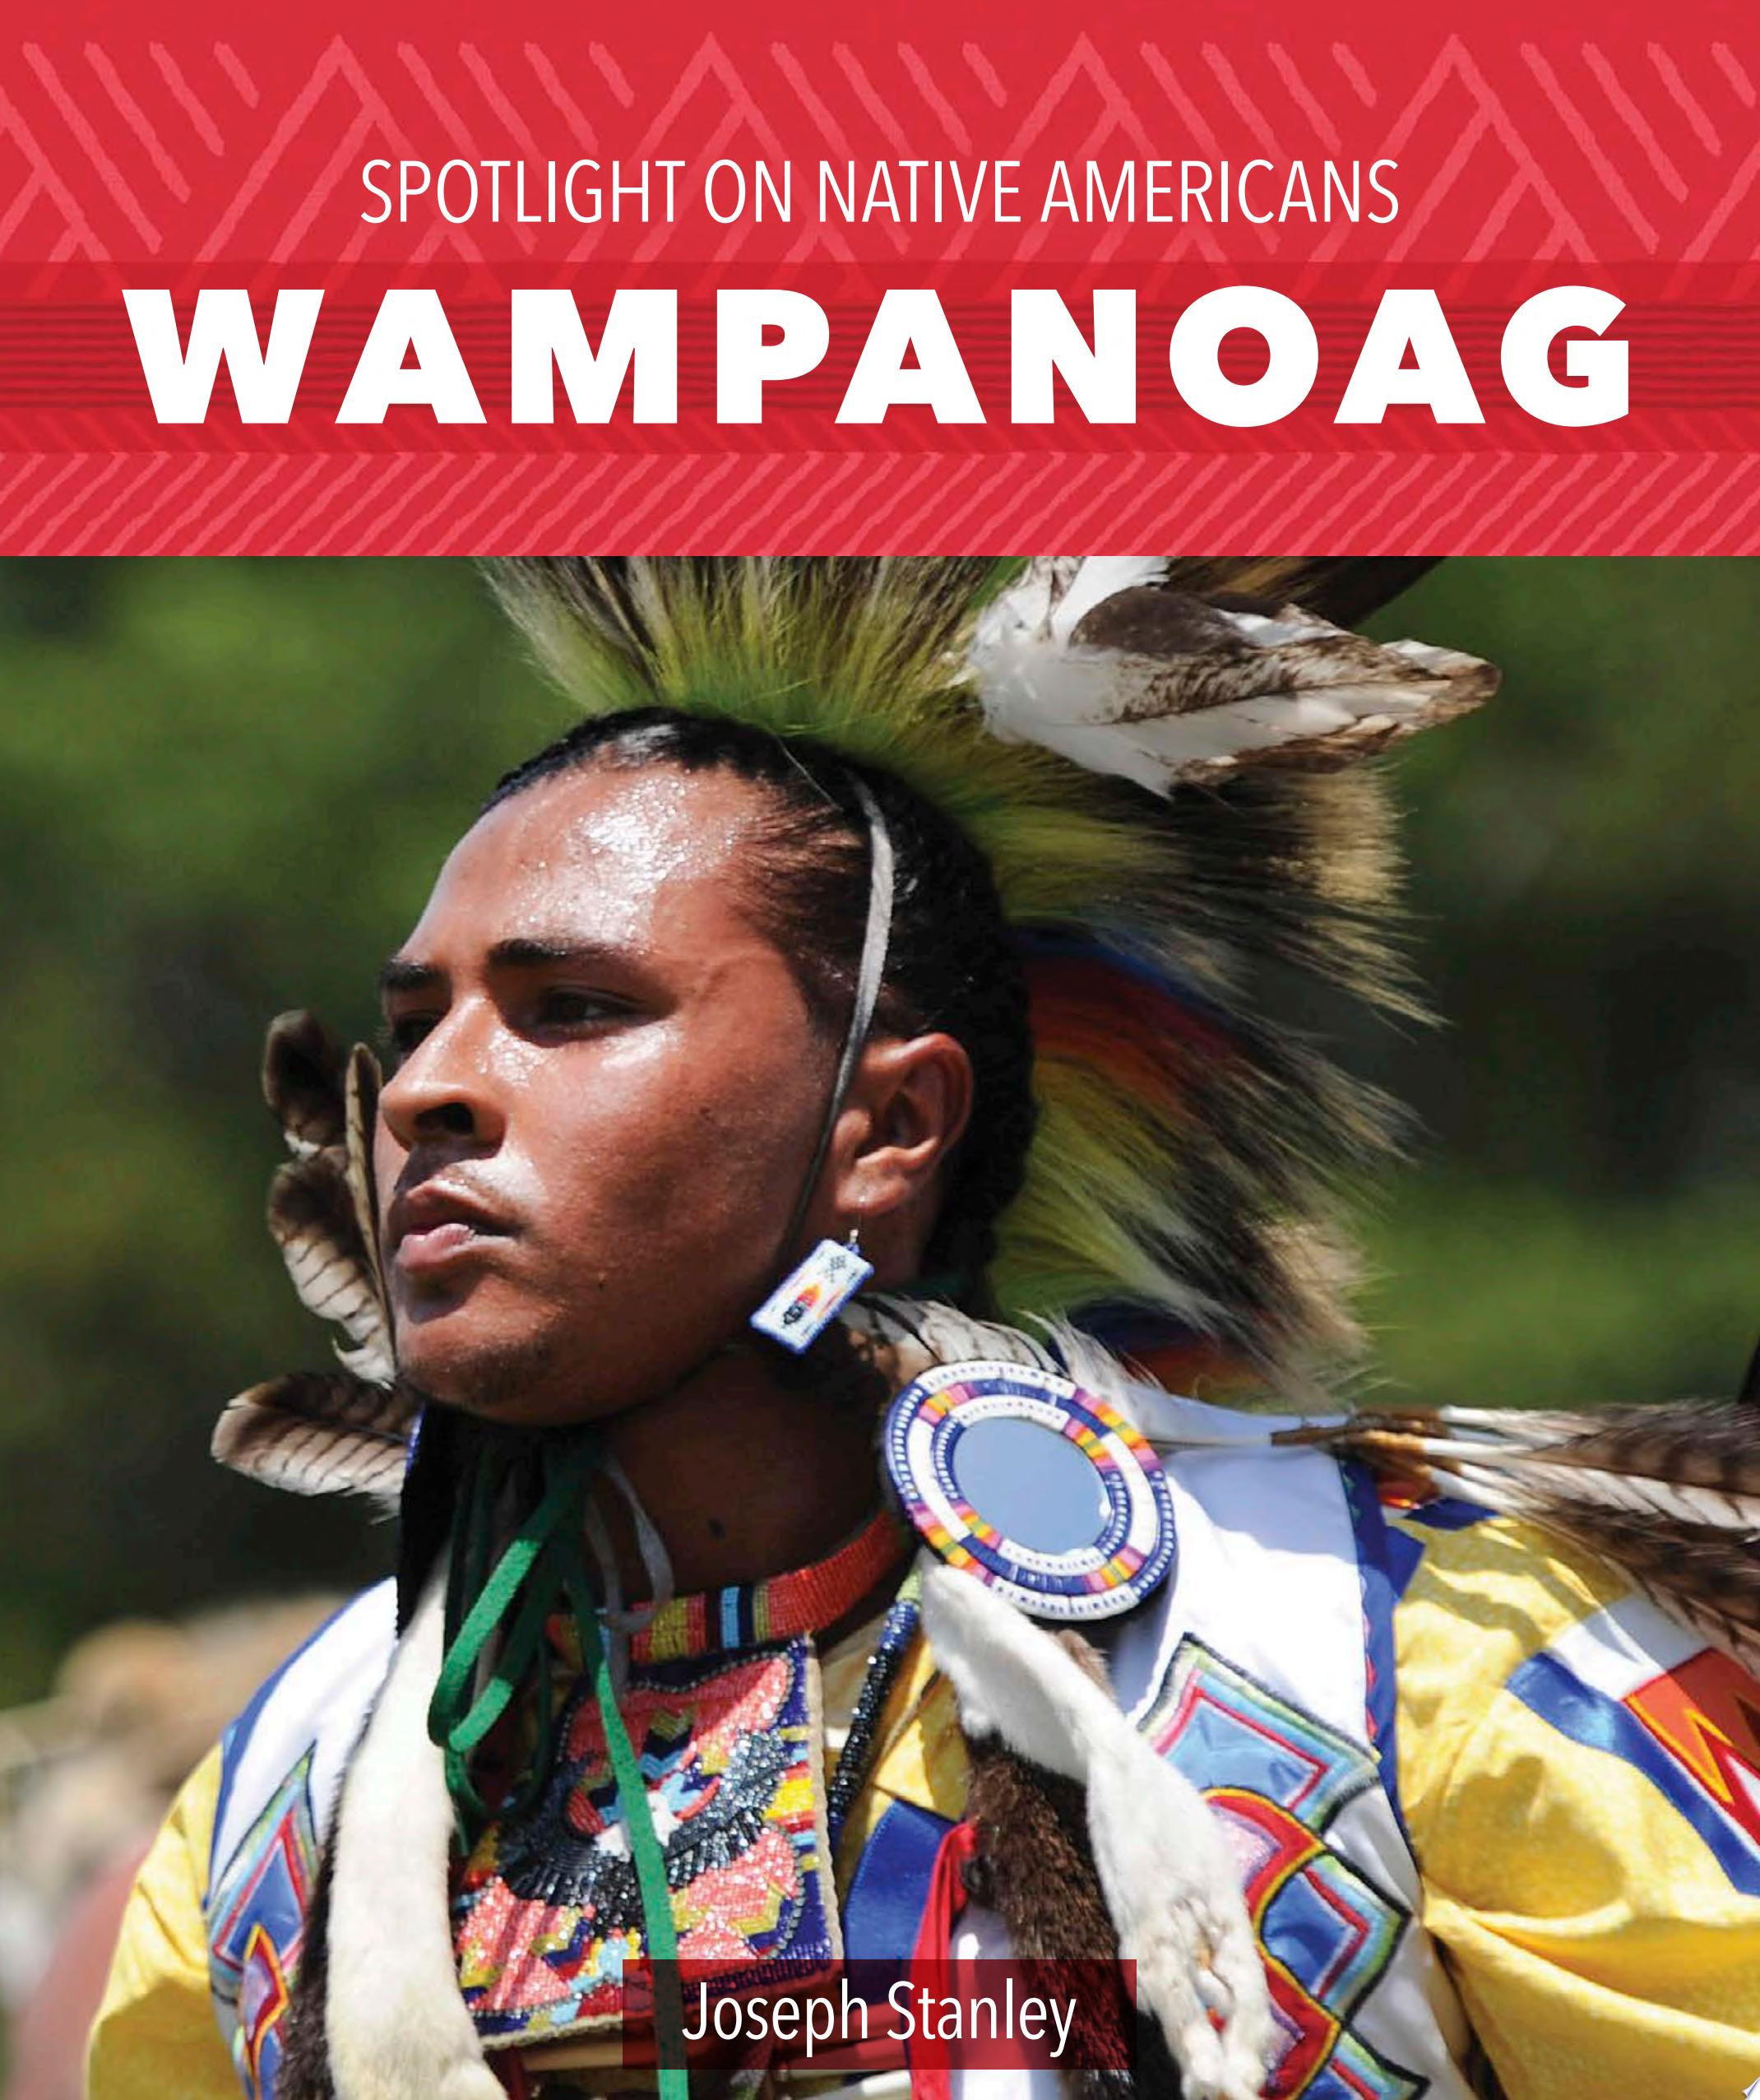 Image for "Wampanoag"